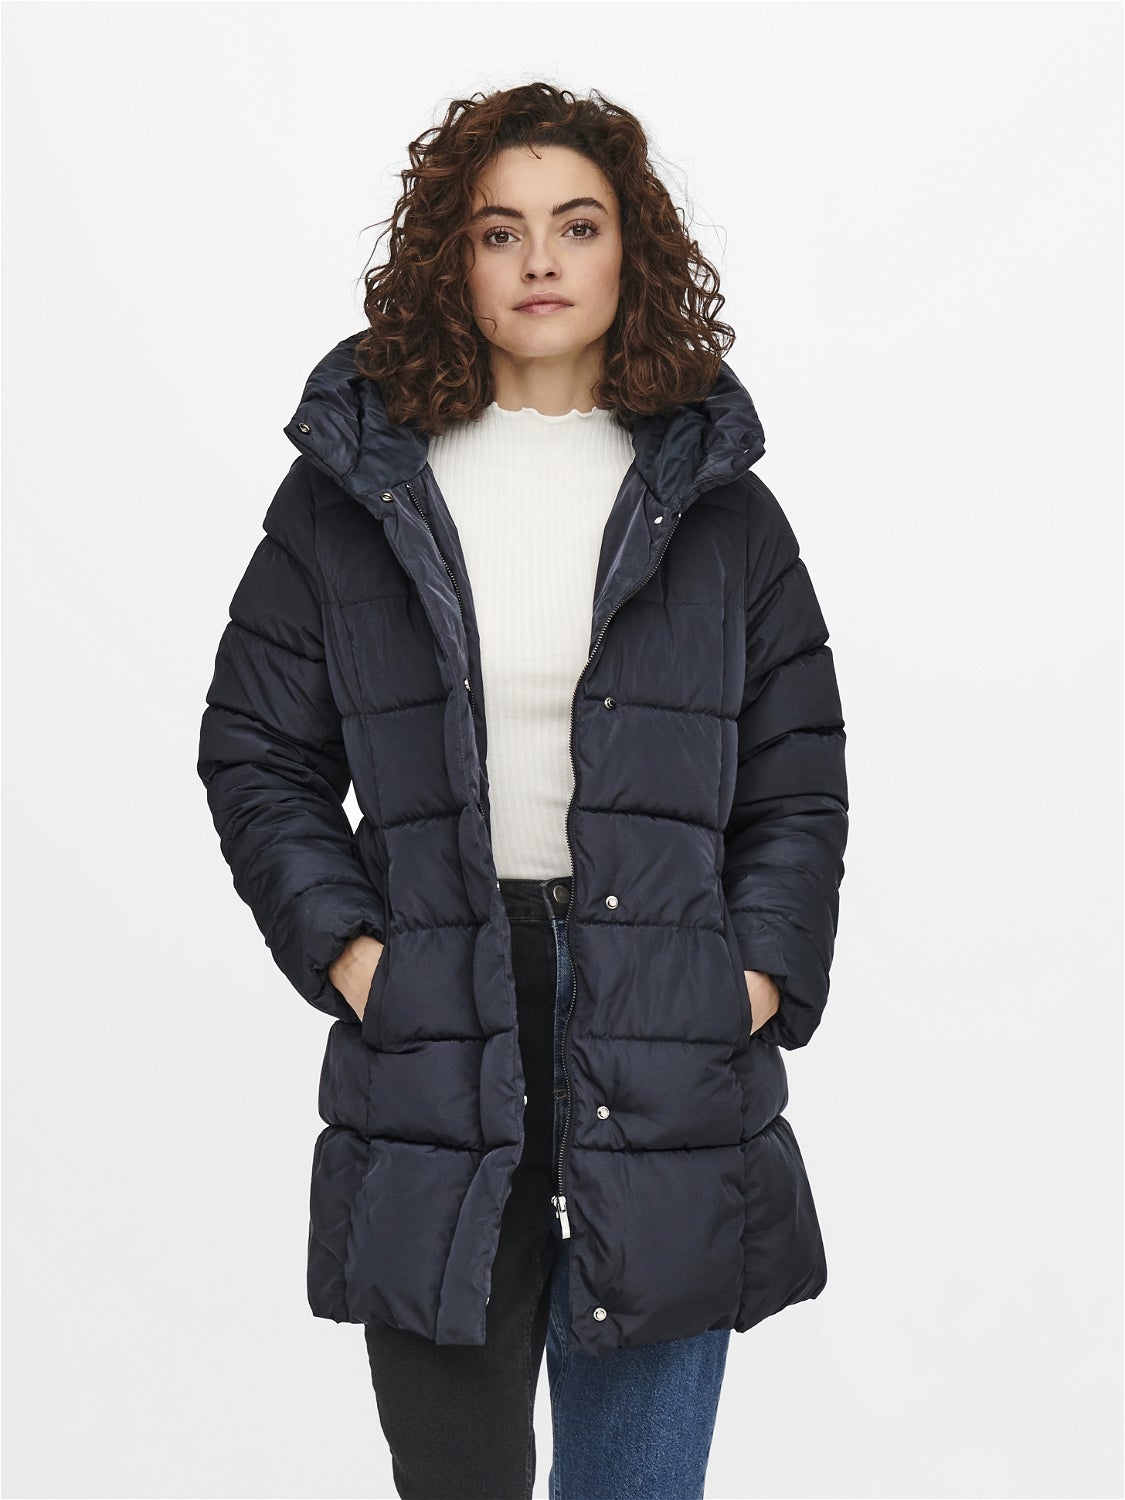 Gray XL discount 43% WOMEN FASHION Coats Puffer jacket Waterproof WHITE GOOSE Puffer jacket 